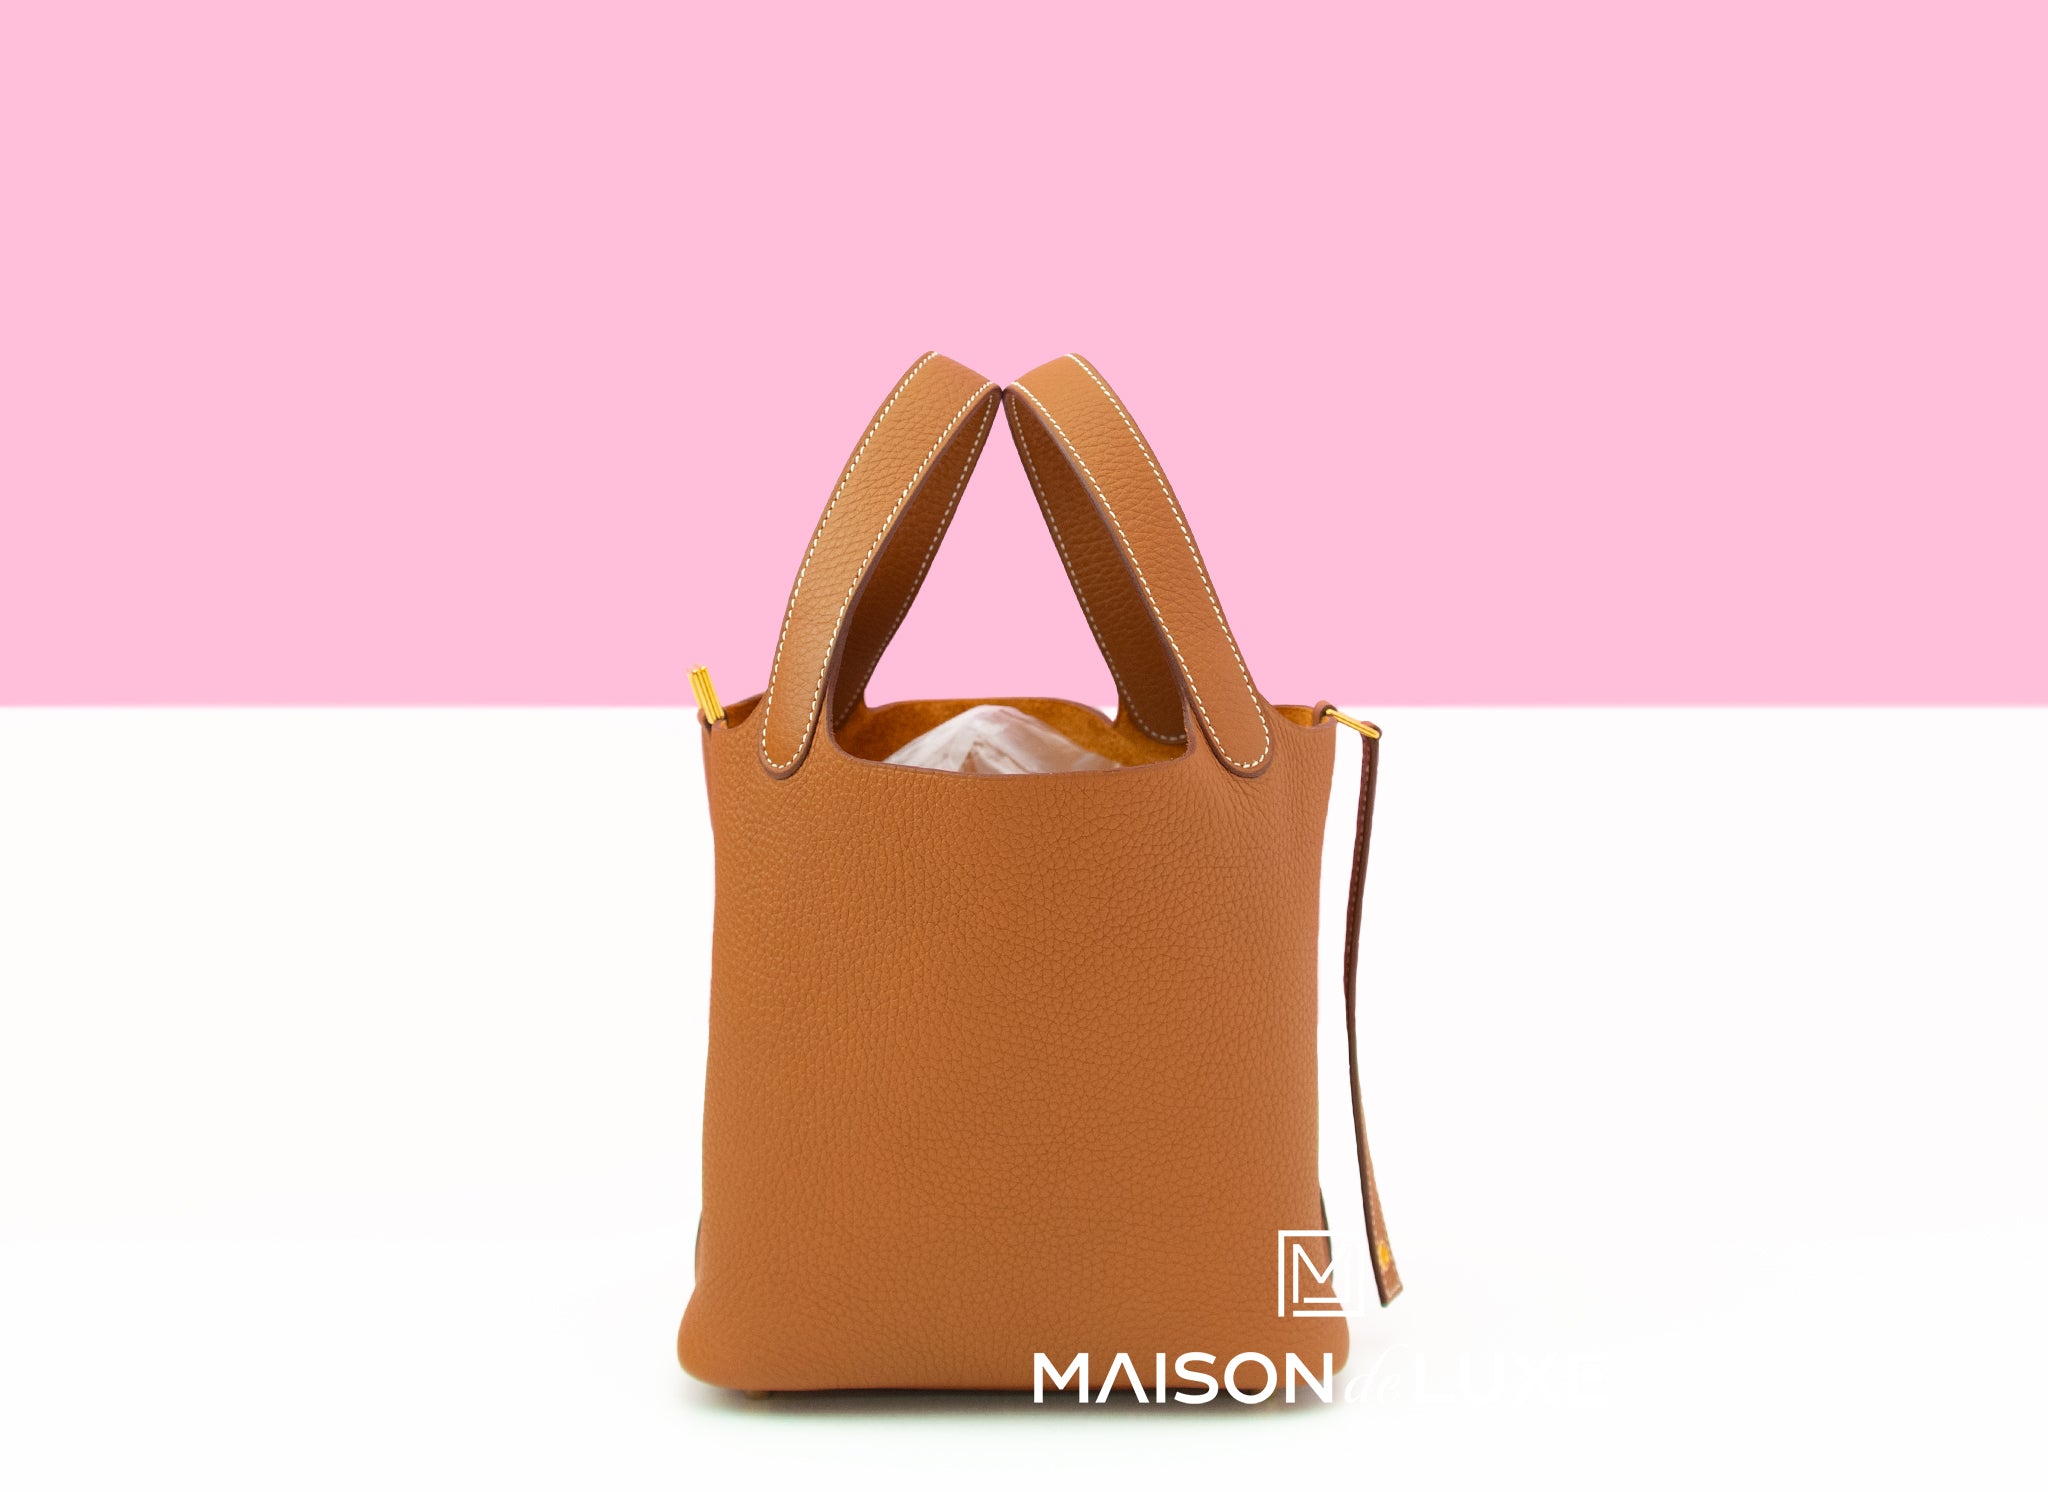 HERMES Picotin Elegant Style Handbags